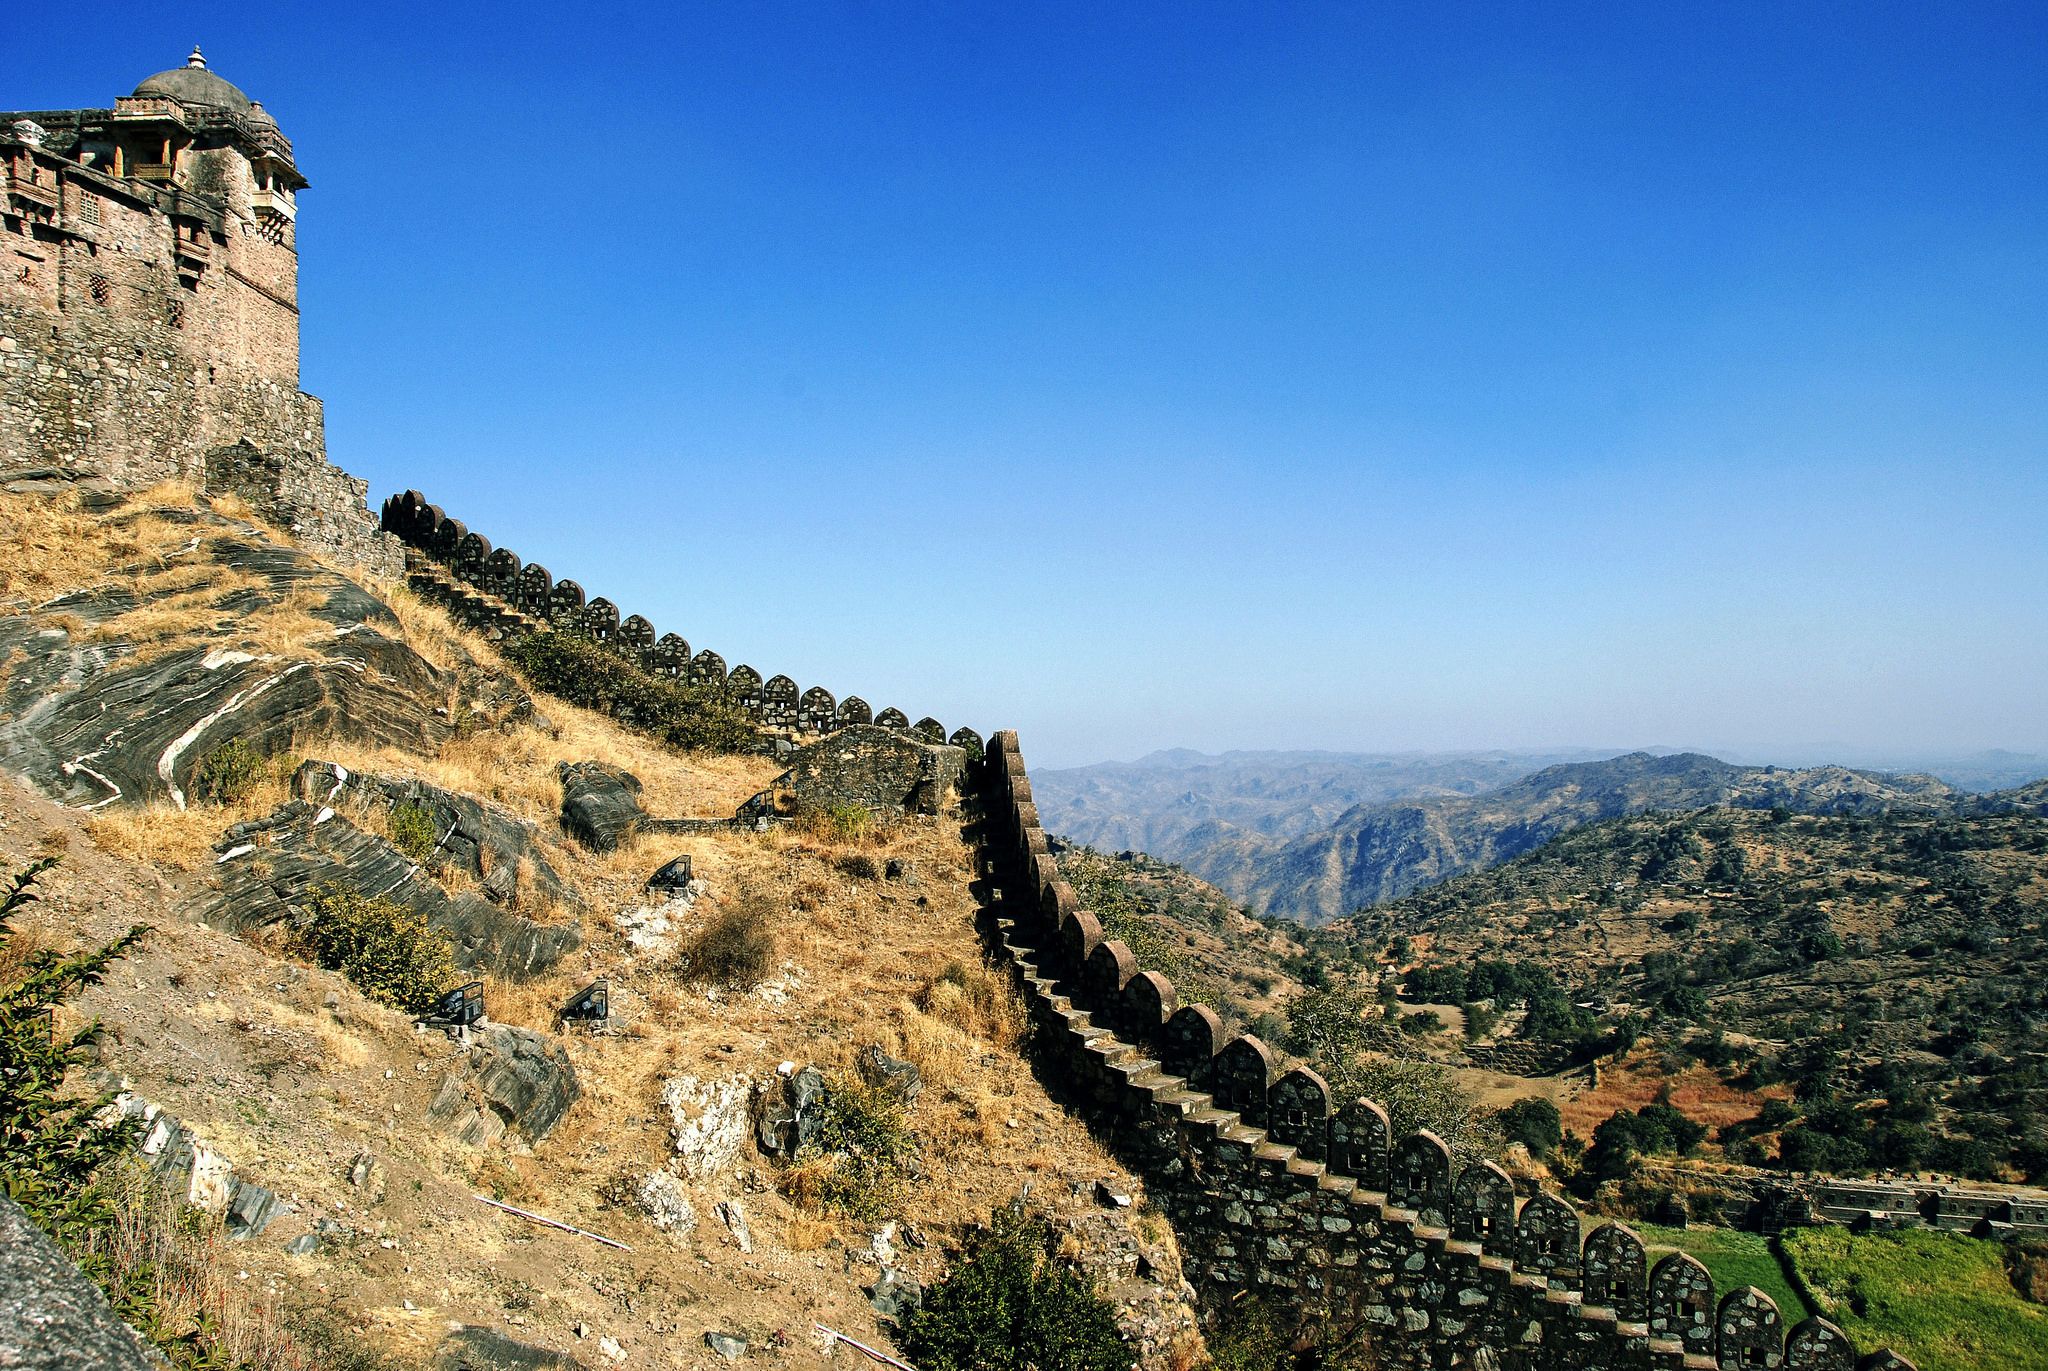 Kumbhalgarh – The Great Wall of India